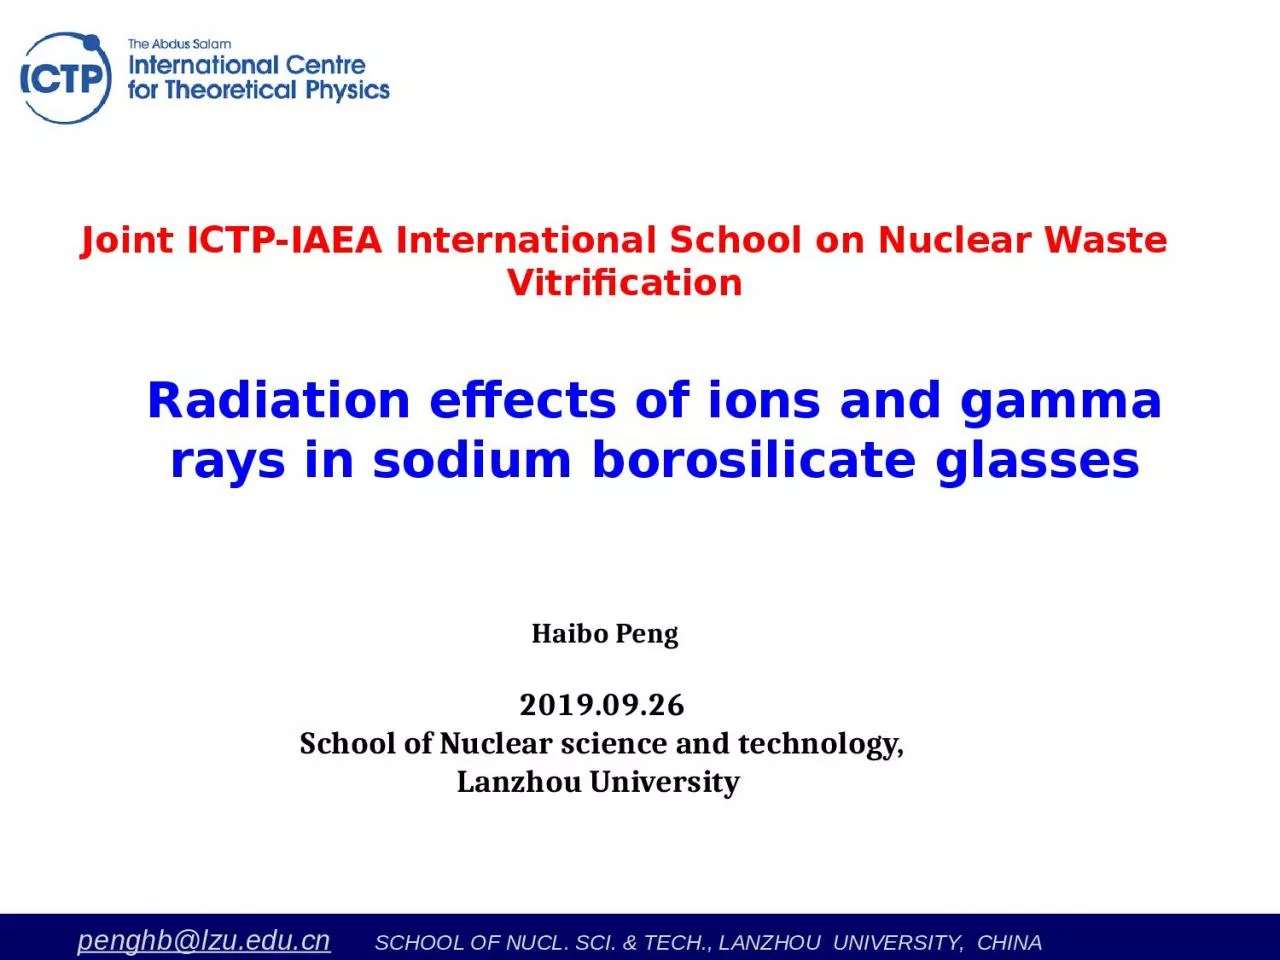 Joint ICTP-IAEA International School on Nuclear Waste Vitrification